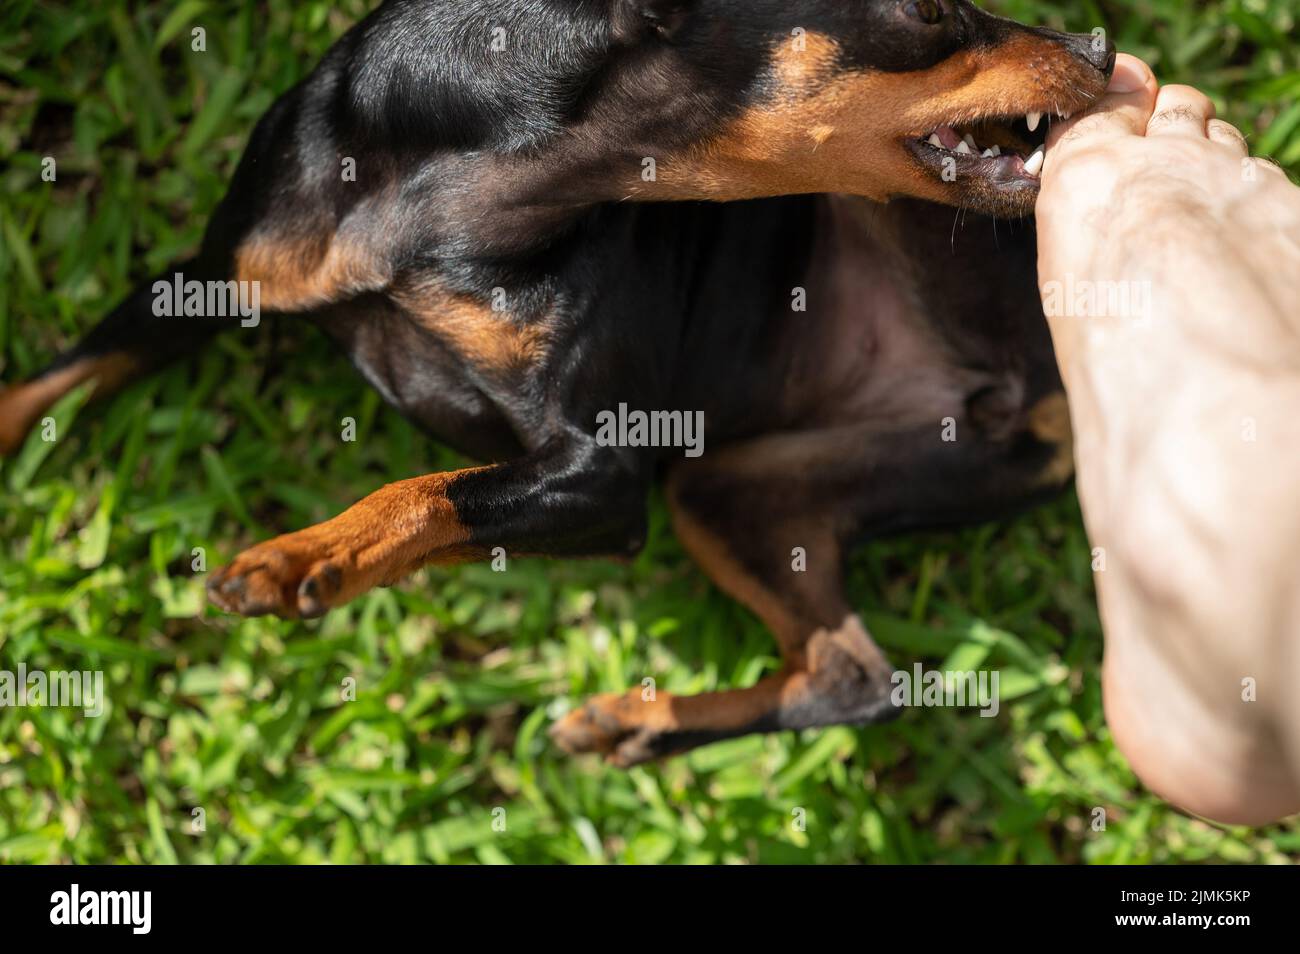 Pincher dog bite play leg fingers on green grass close up view Stock Photo